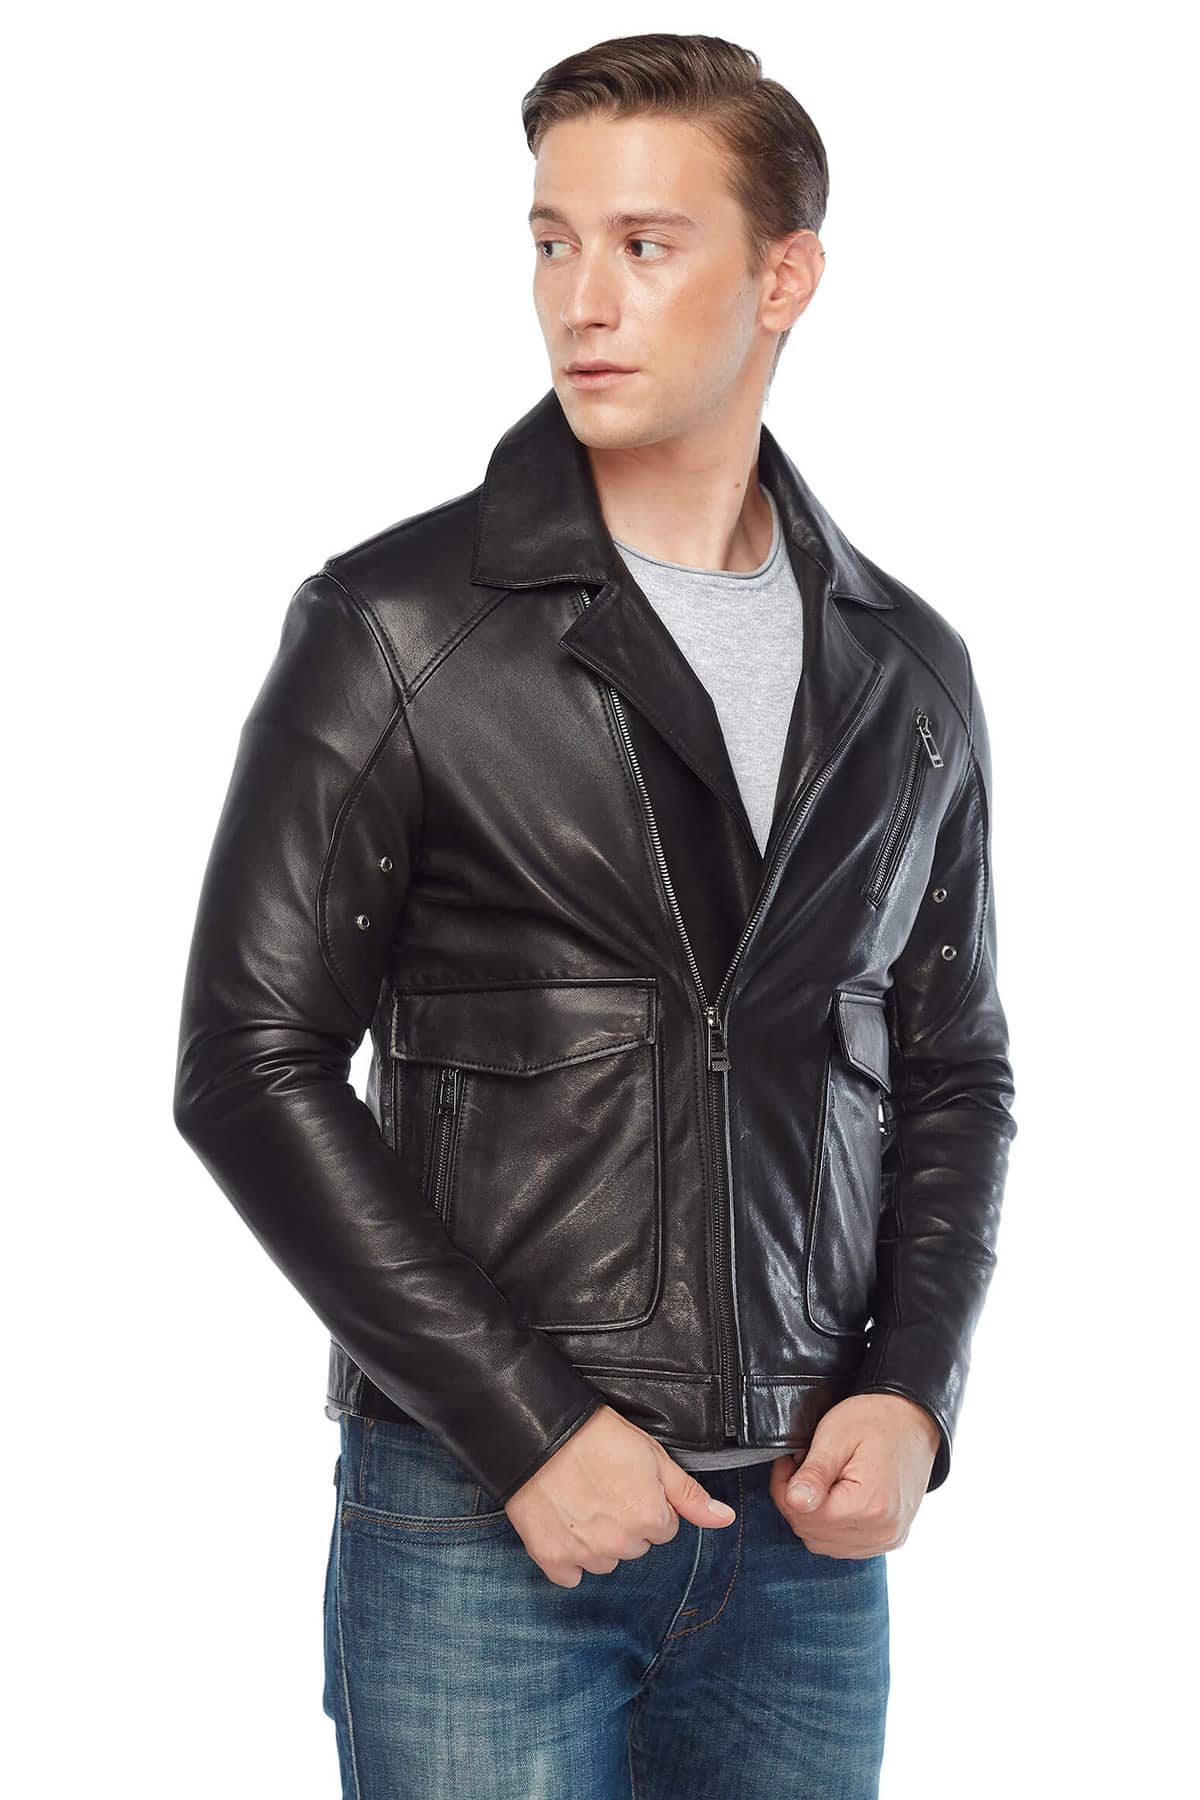 Orlando Bloom Genuine Leather Coat Black3